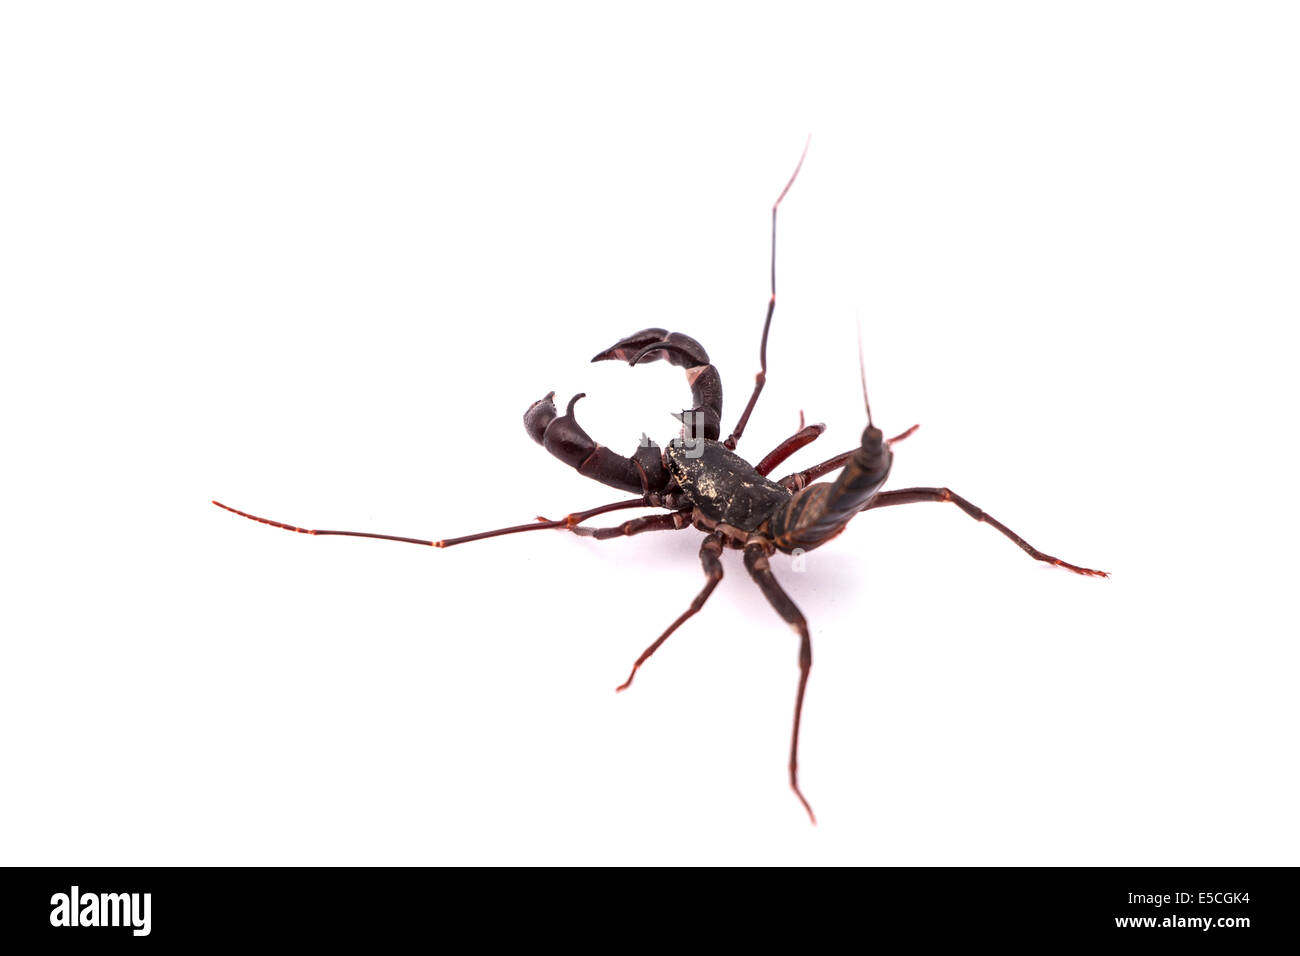 vinegaroon scorpion isolated on white background Stock Photo